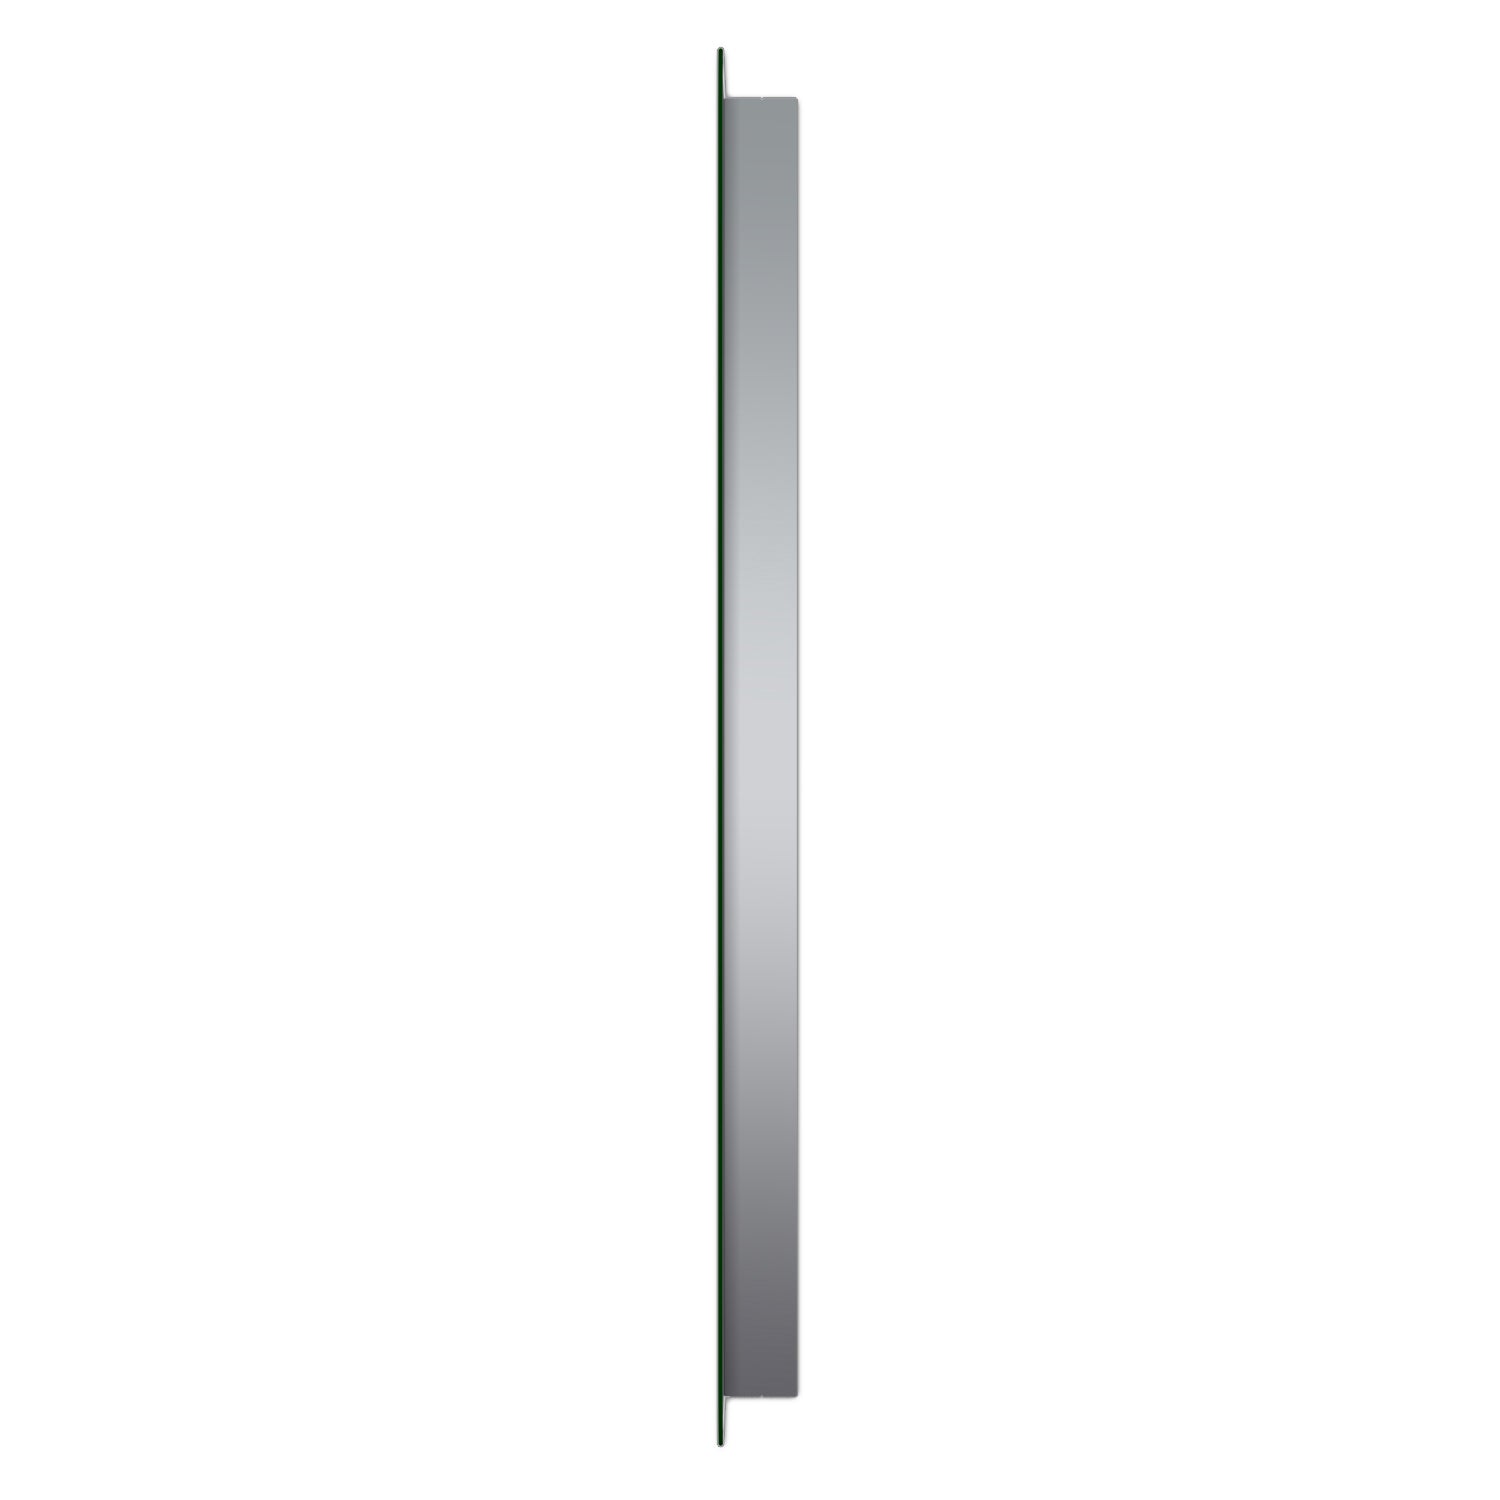 Badezimmer LED Spiegel Badspiegel mit Beleuchtung Wandschalter 80x60cm GTBM1586B